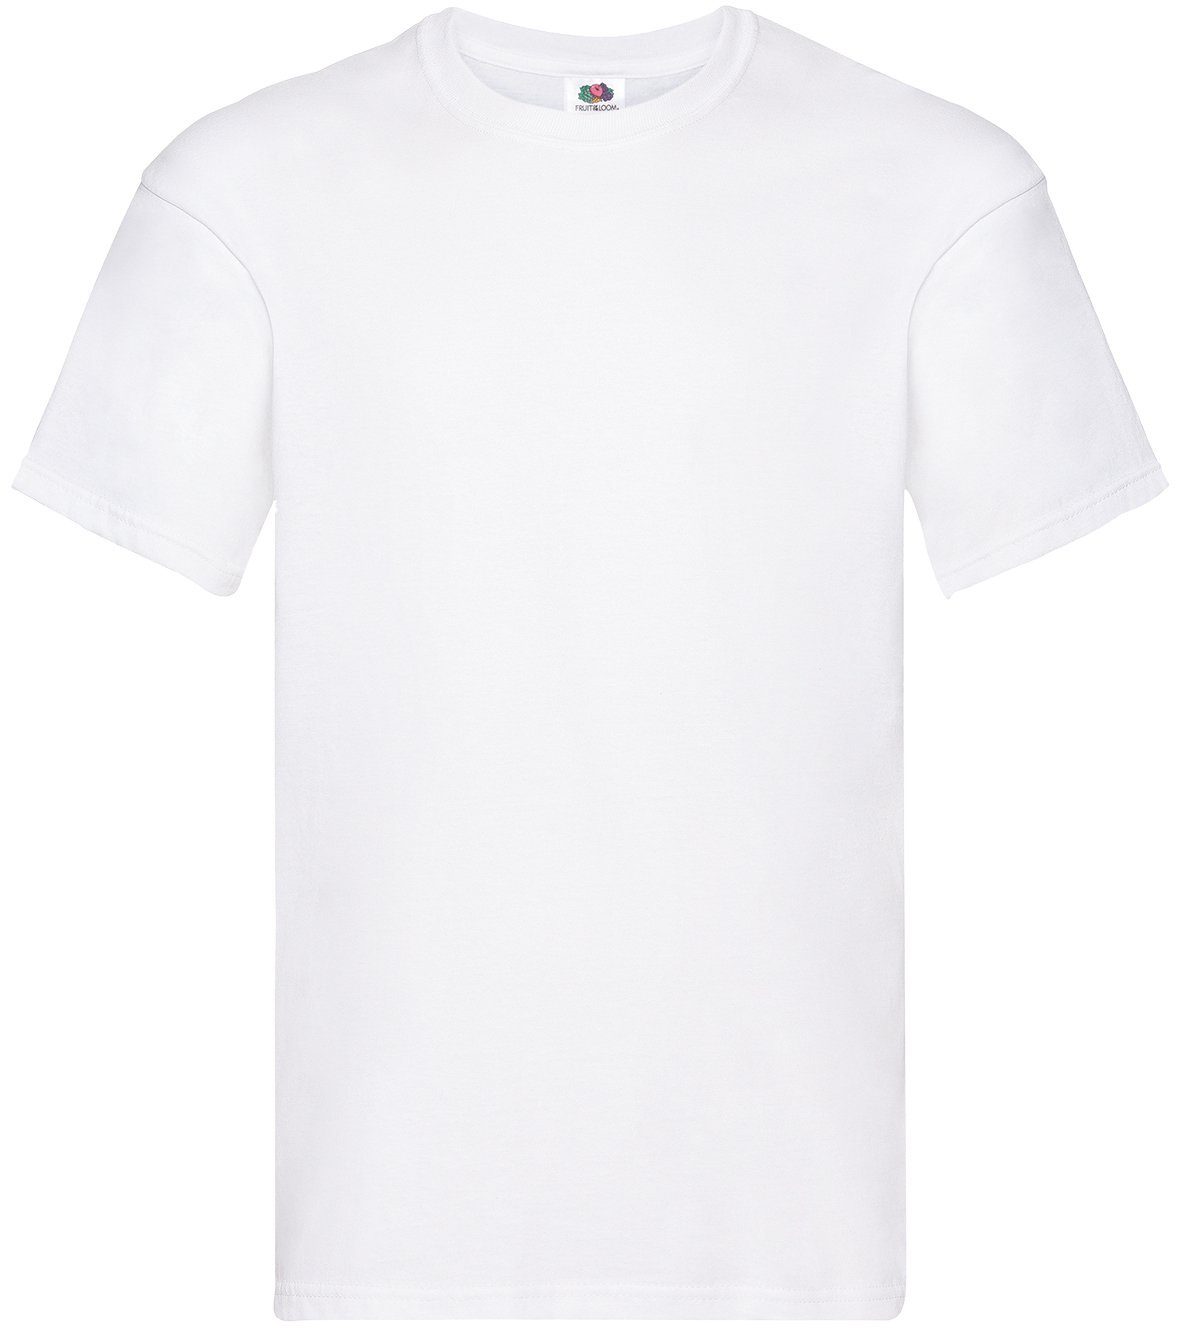 Herren T-Shirt Weiß TEXXILLA T-Shirt